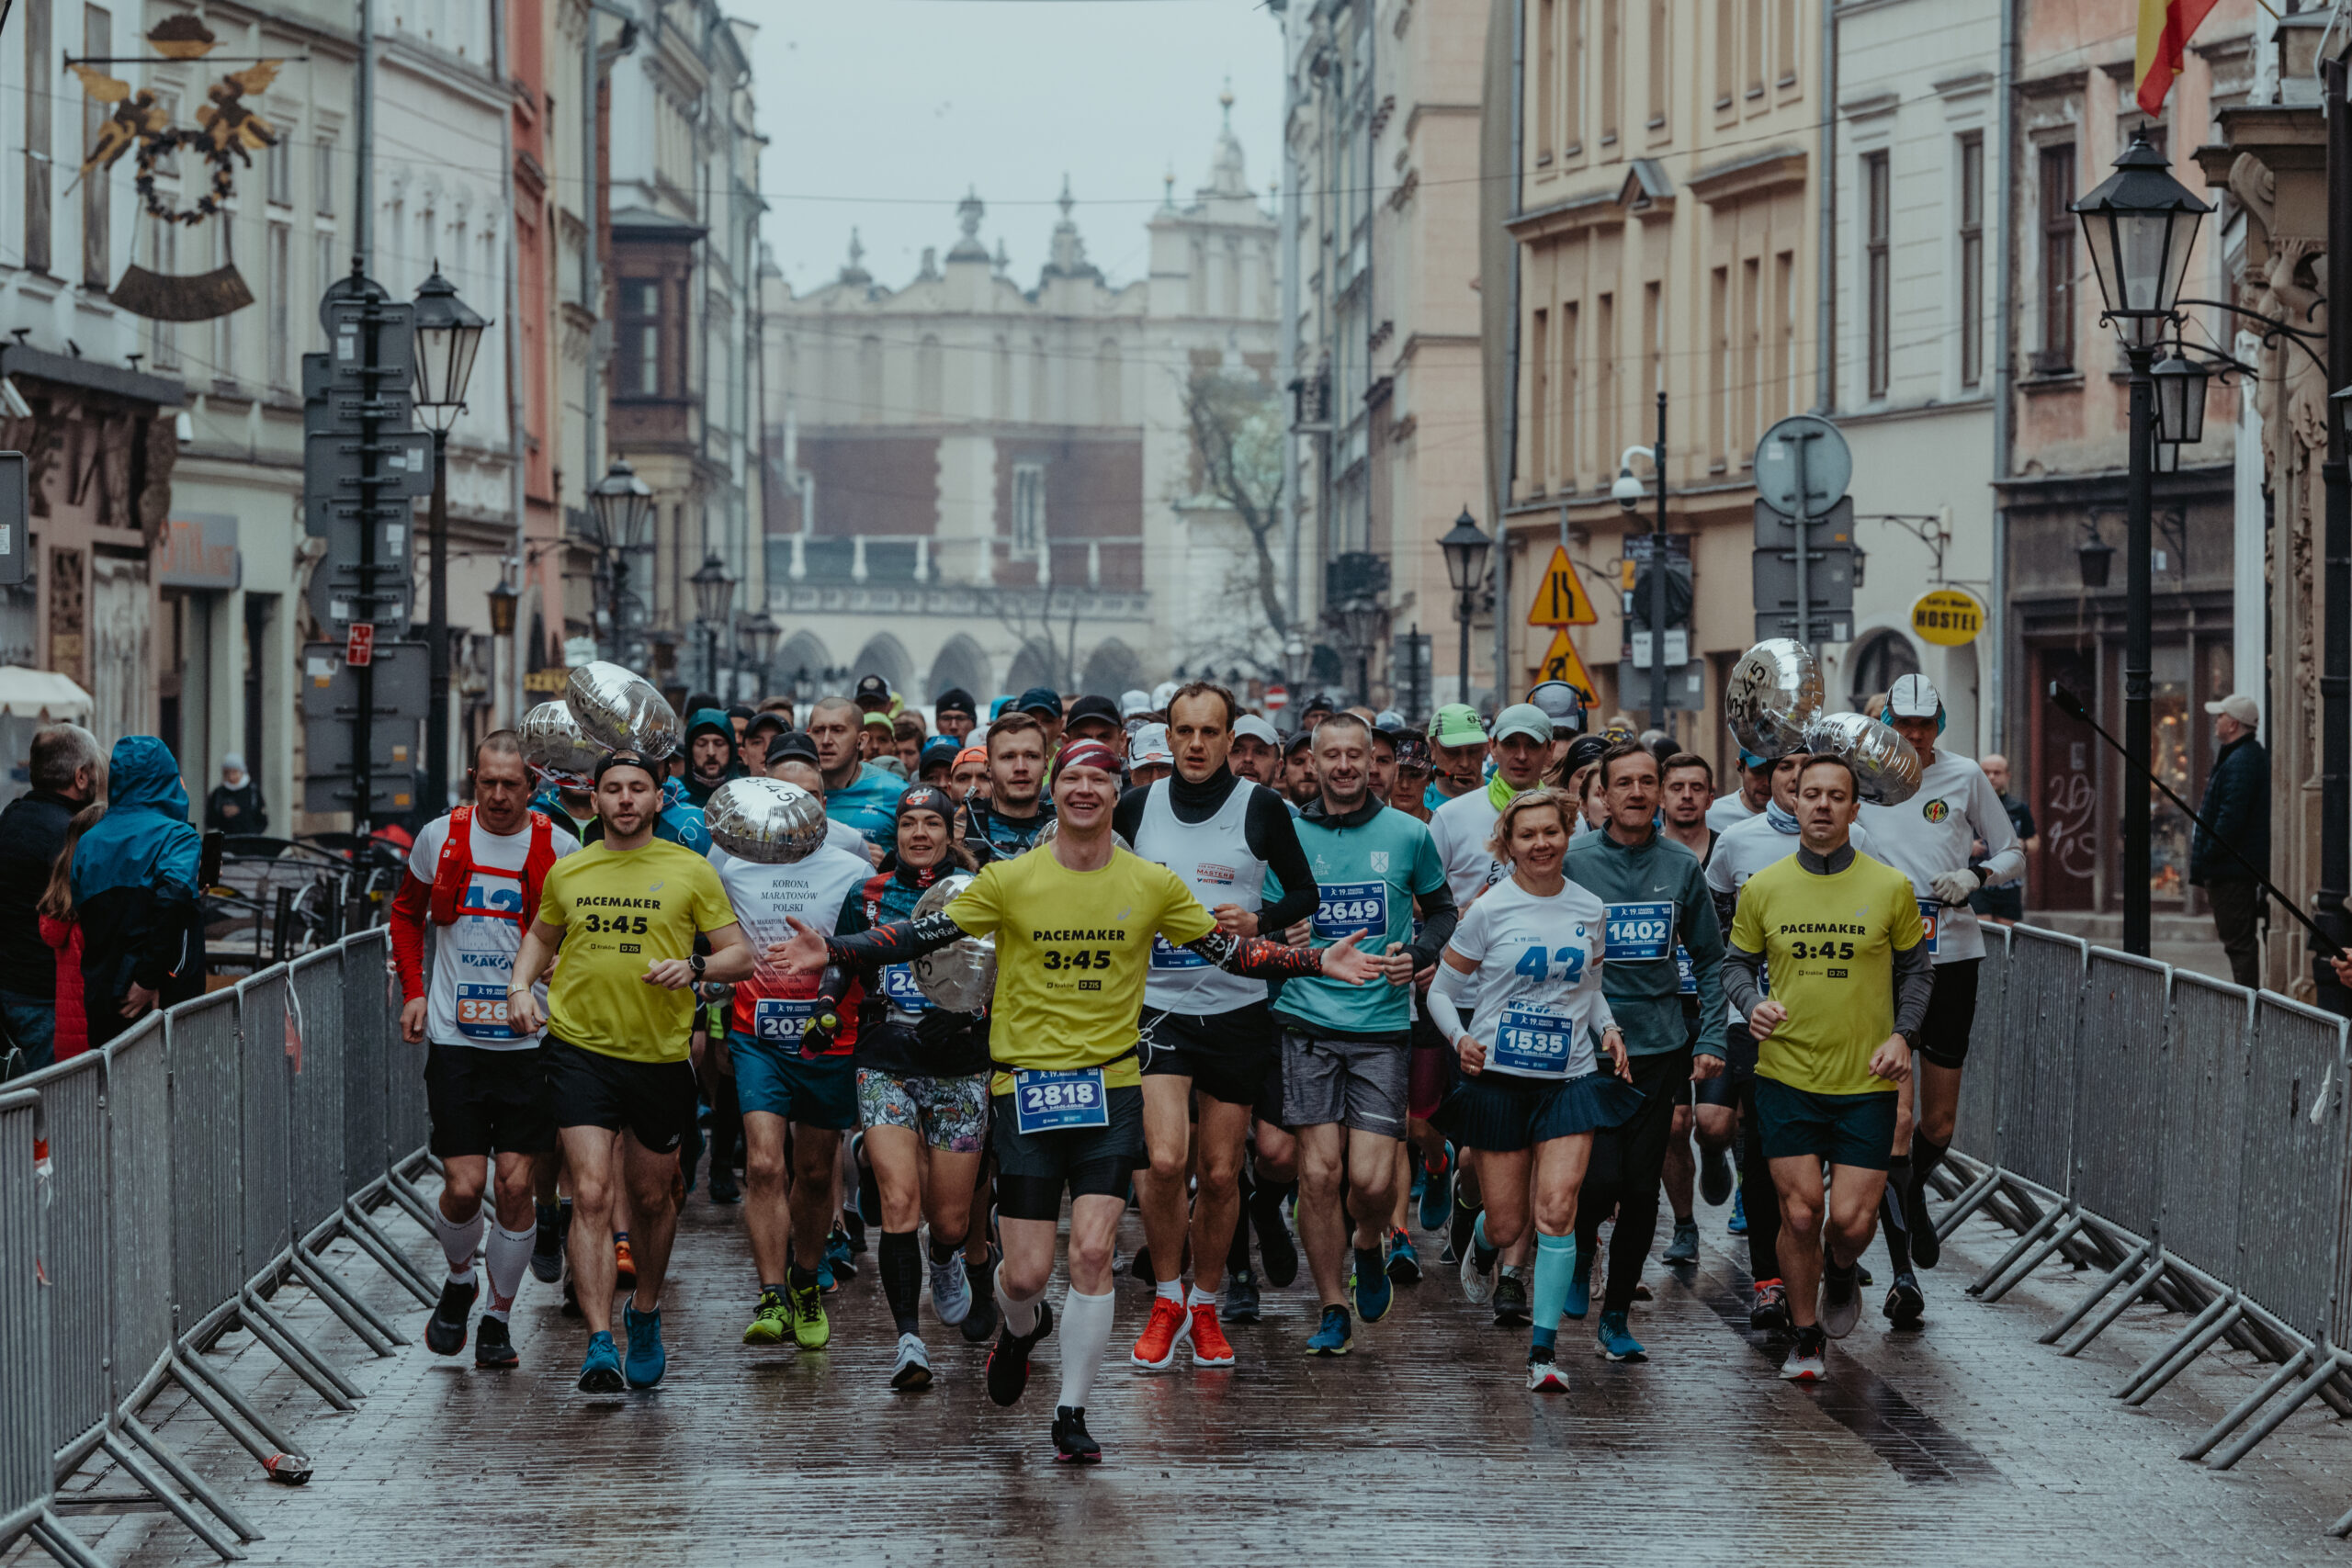 20. Cracovia Maraton